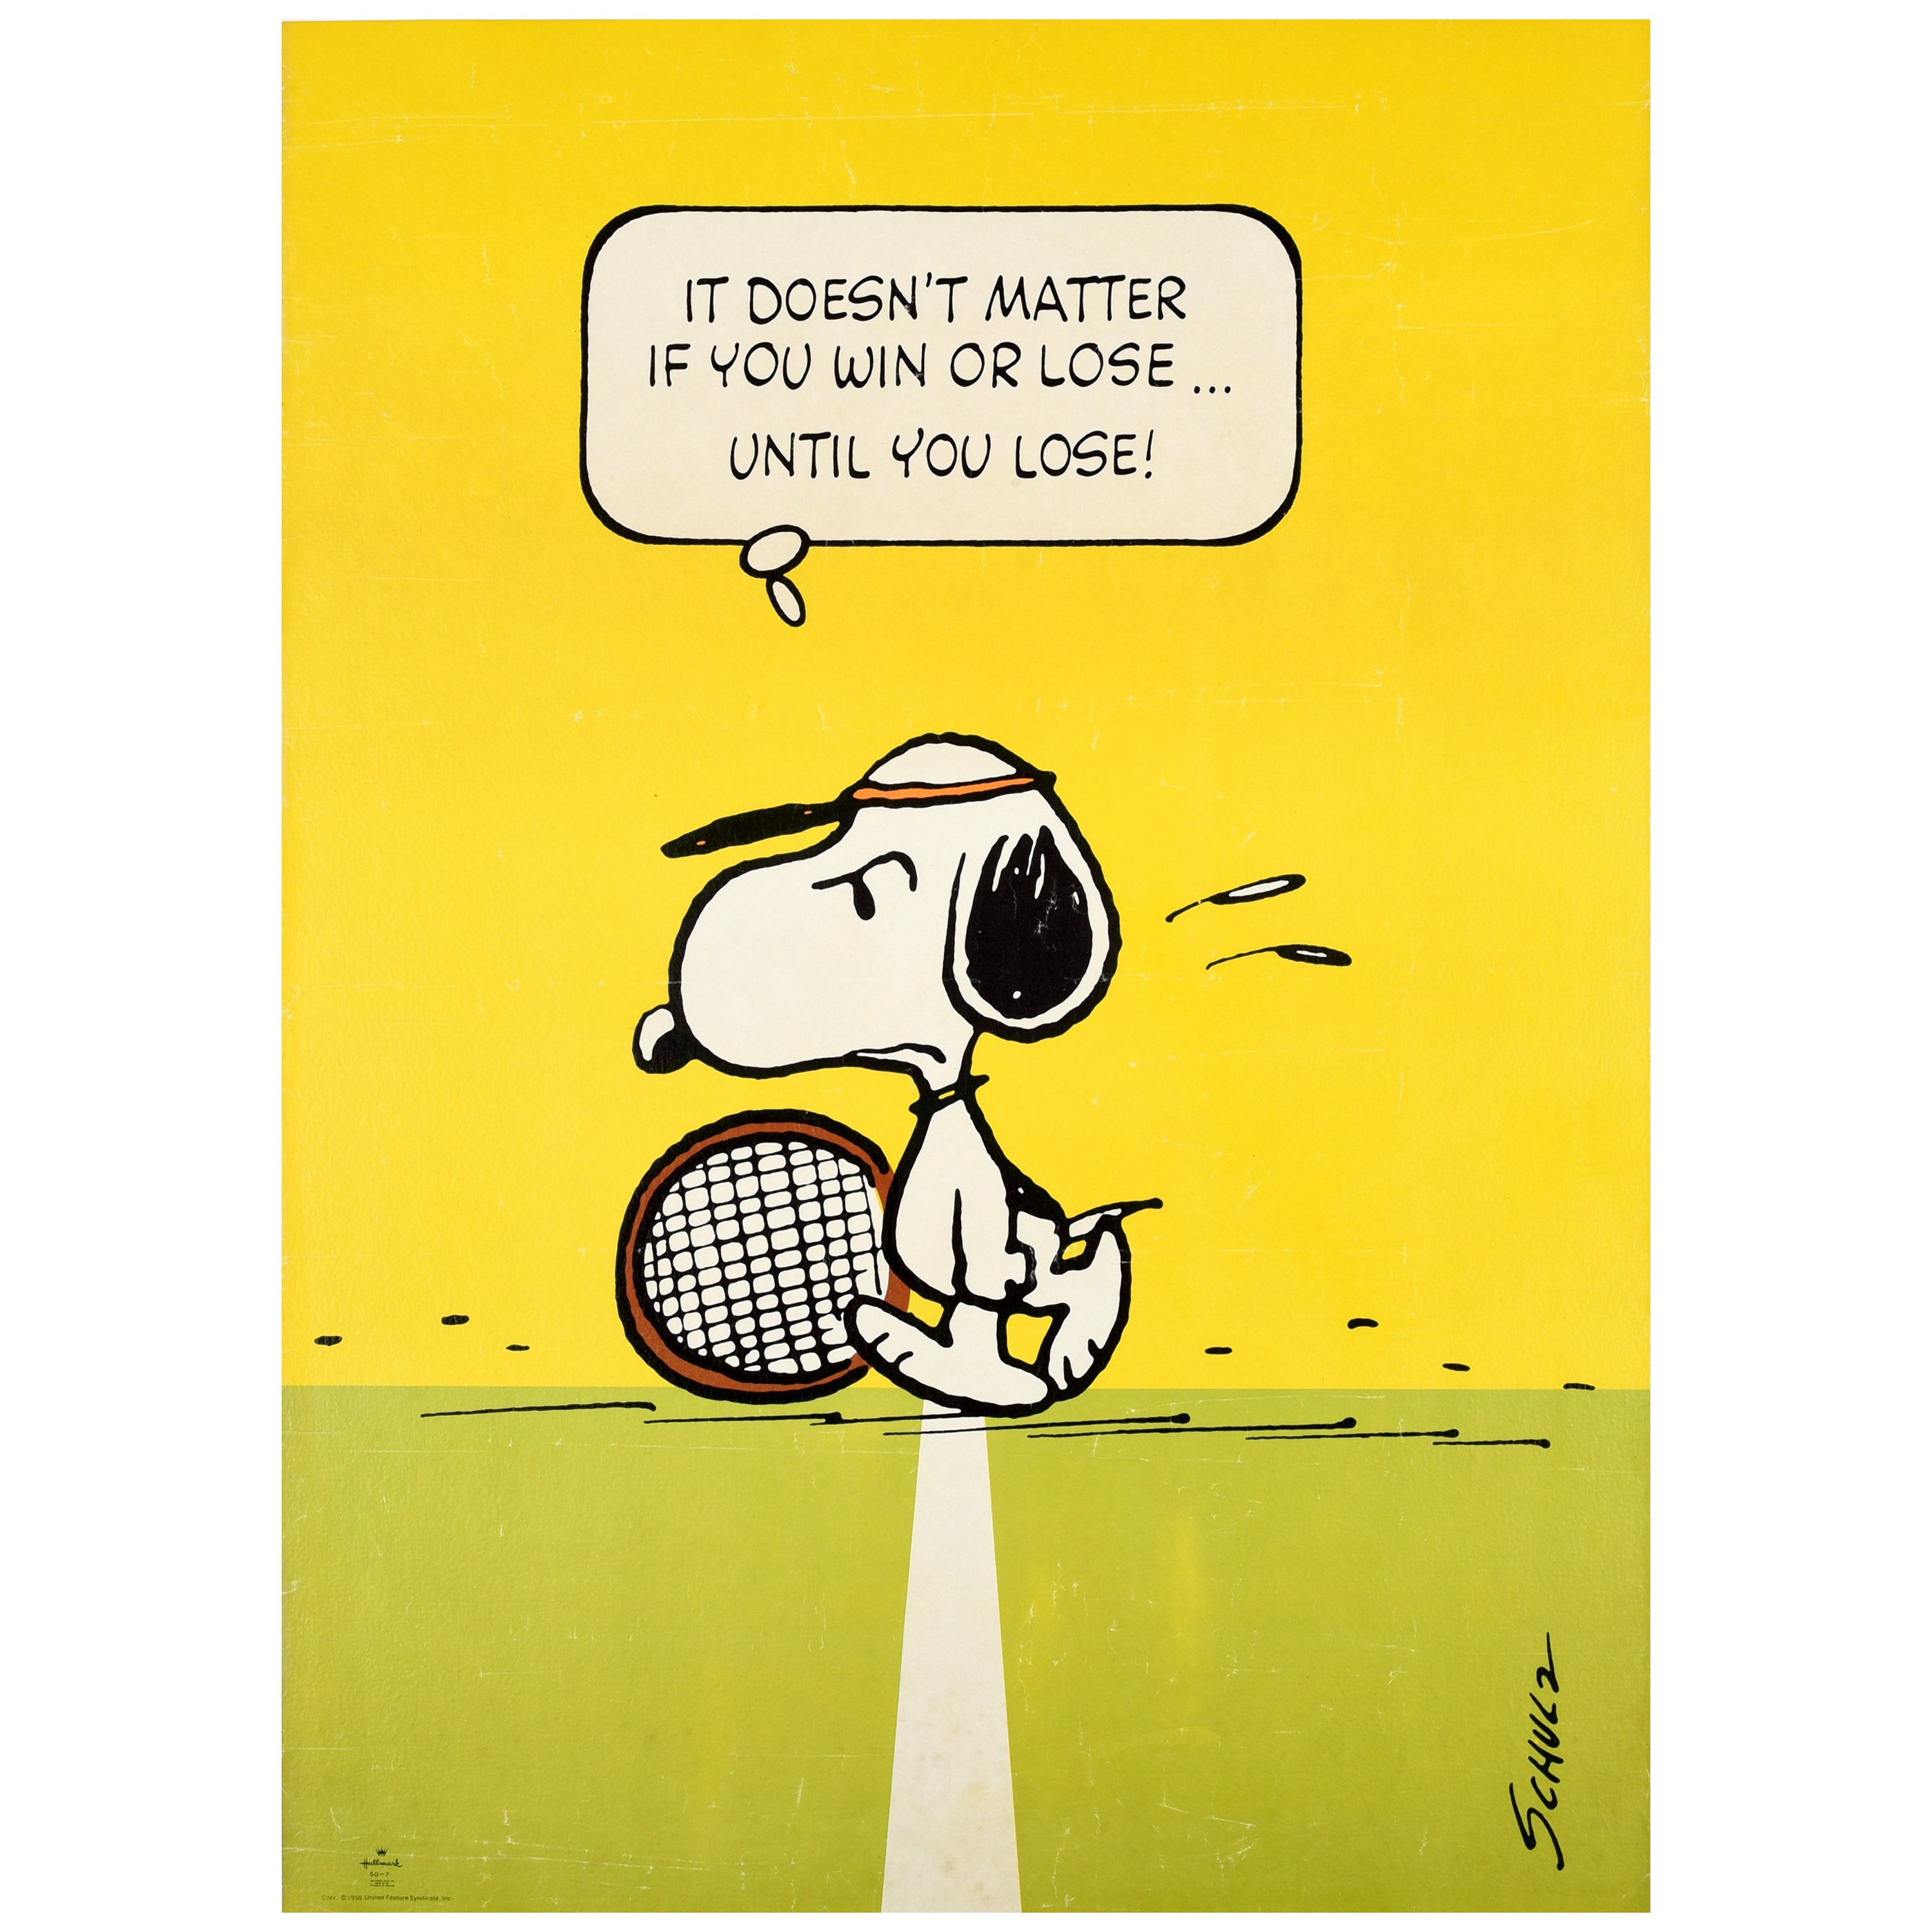 Original Vintage Poster Snoopy Tennis Win Lose Charles M Schulz Peanuts Cartoon For Sale